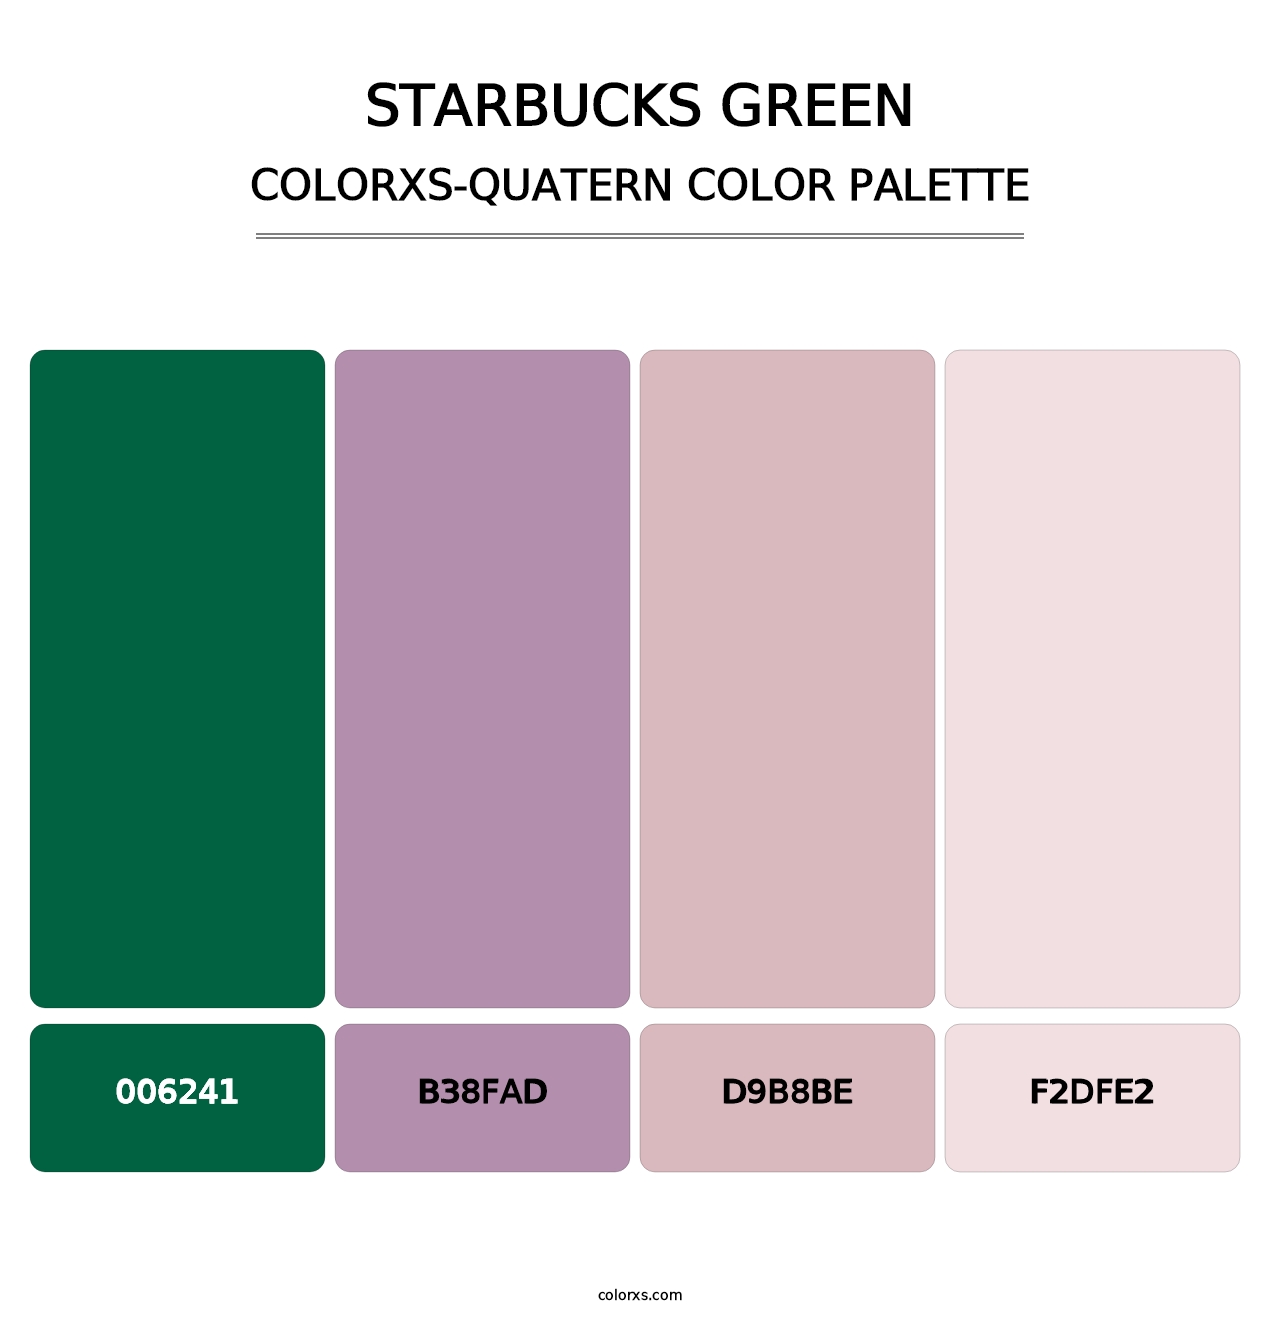 Starbucks Green - Colorxs Quatern Palette